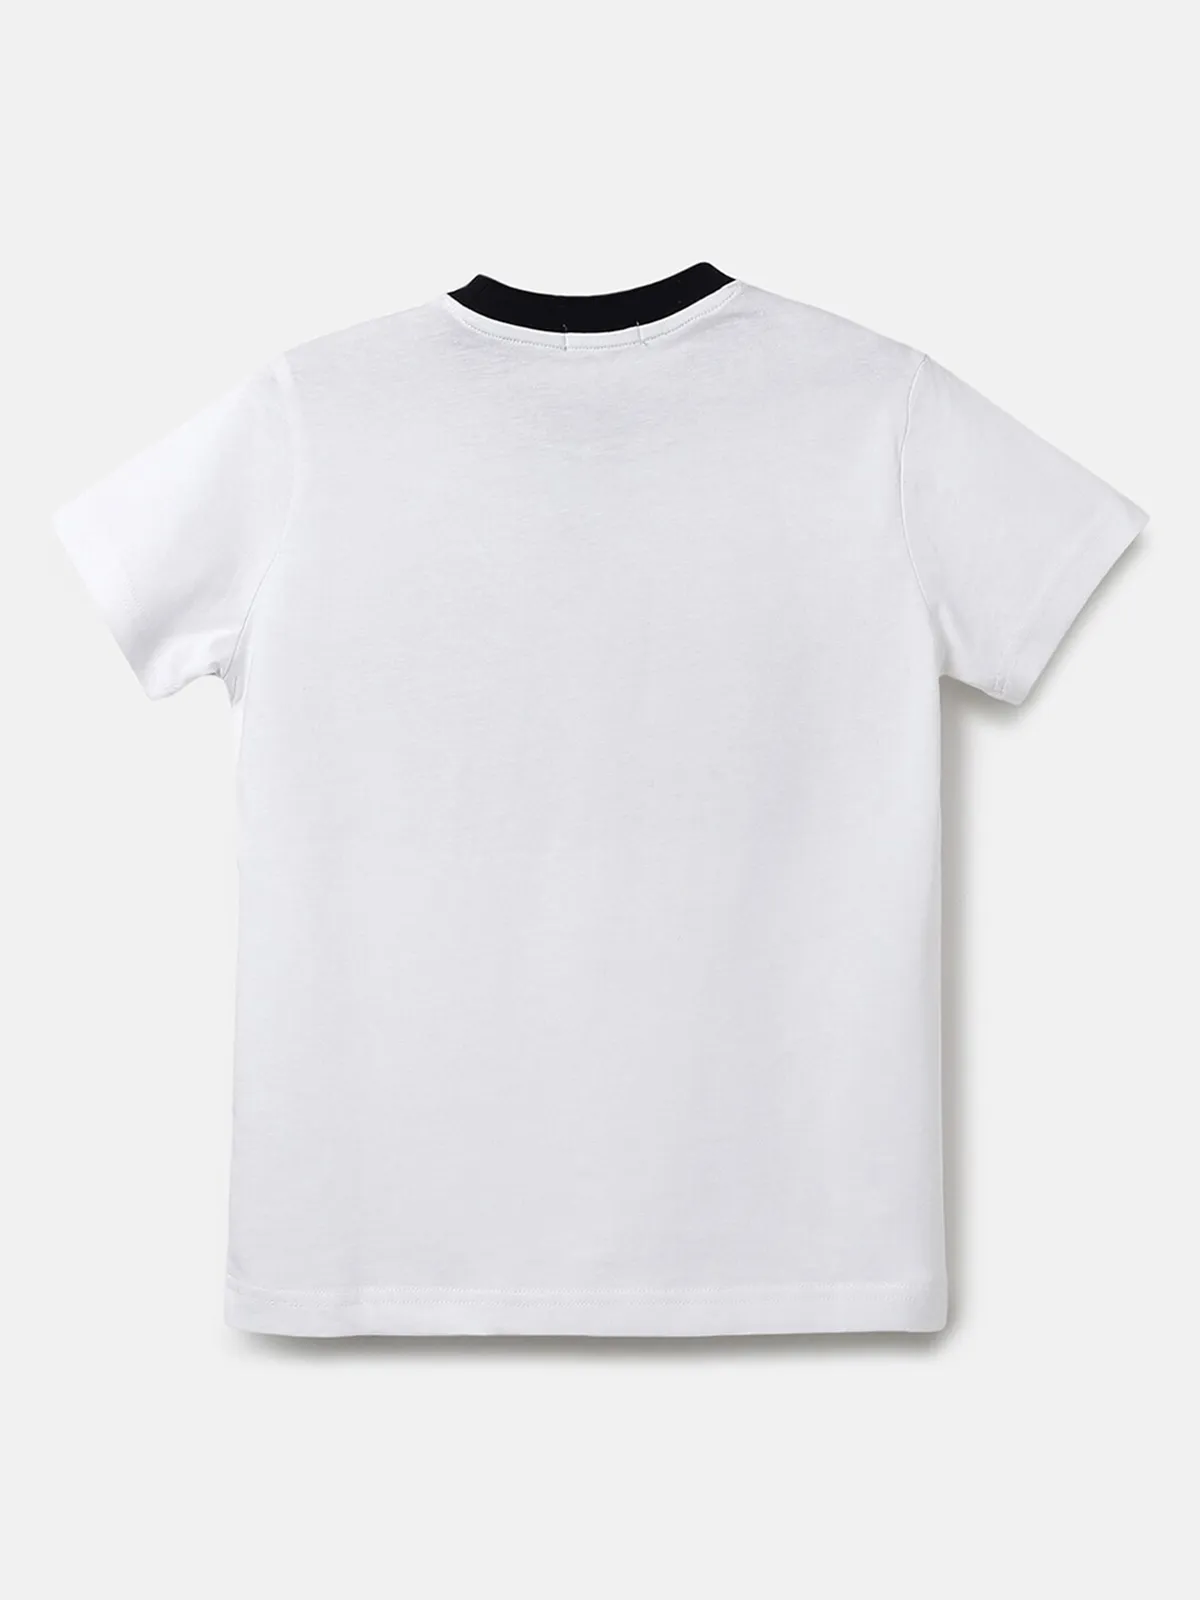 UCB white printed casual t shirt